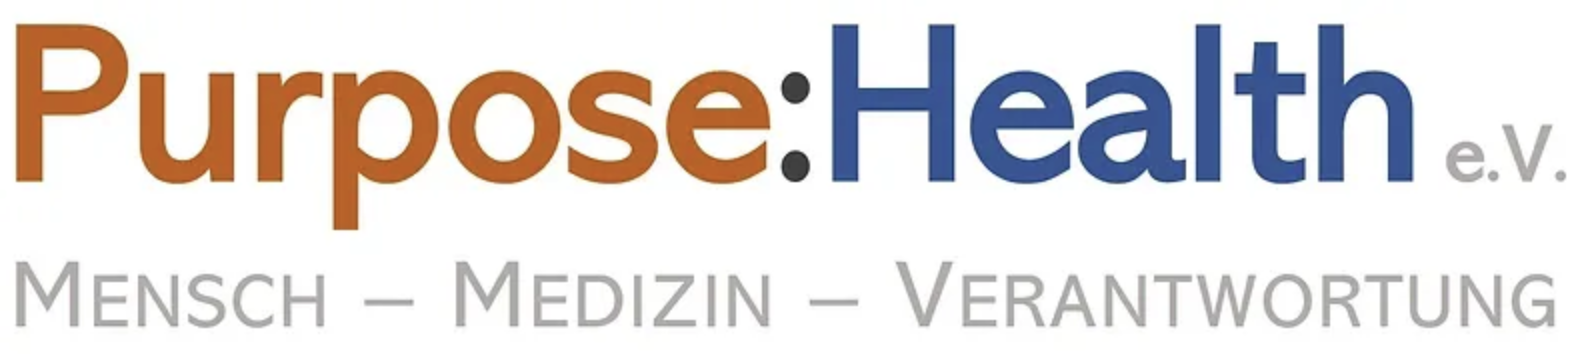 purpose-health_logo